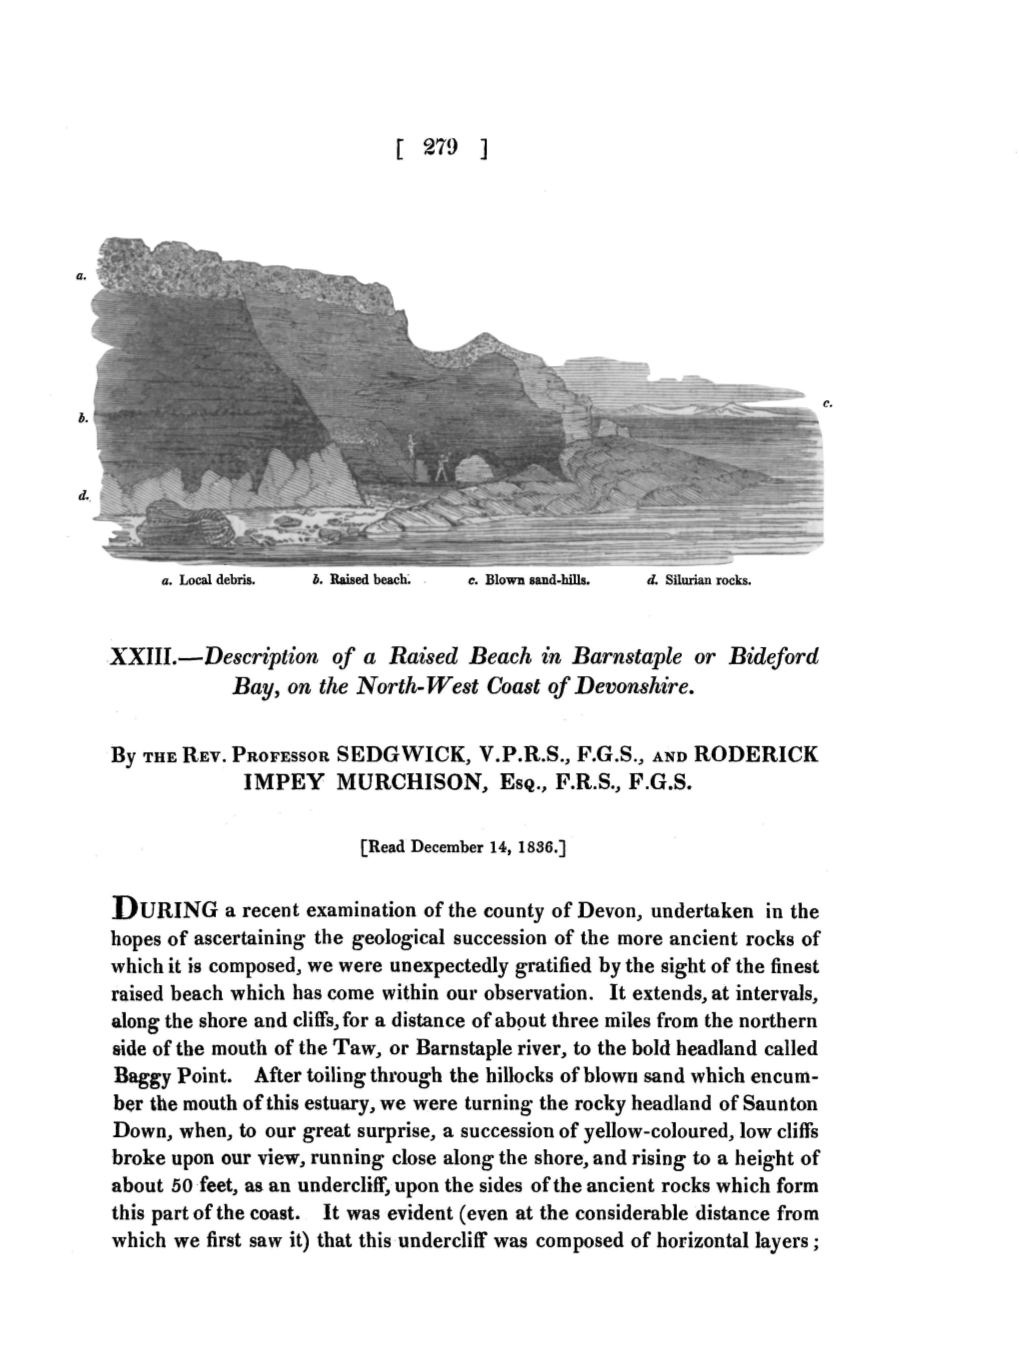 XXIII.—Description of a Raised Beach in Barnstaple Or Bideford Bay, on the North-West Coast of Devonshire